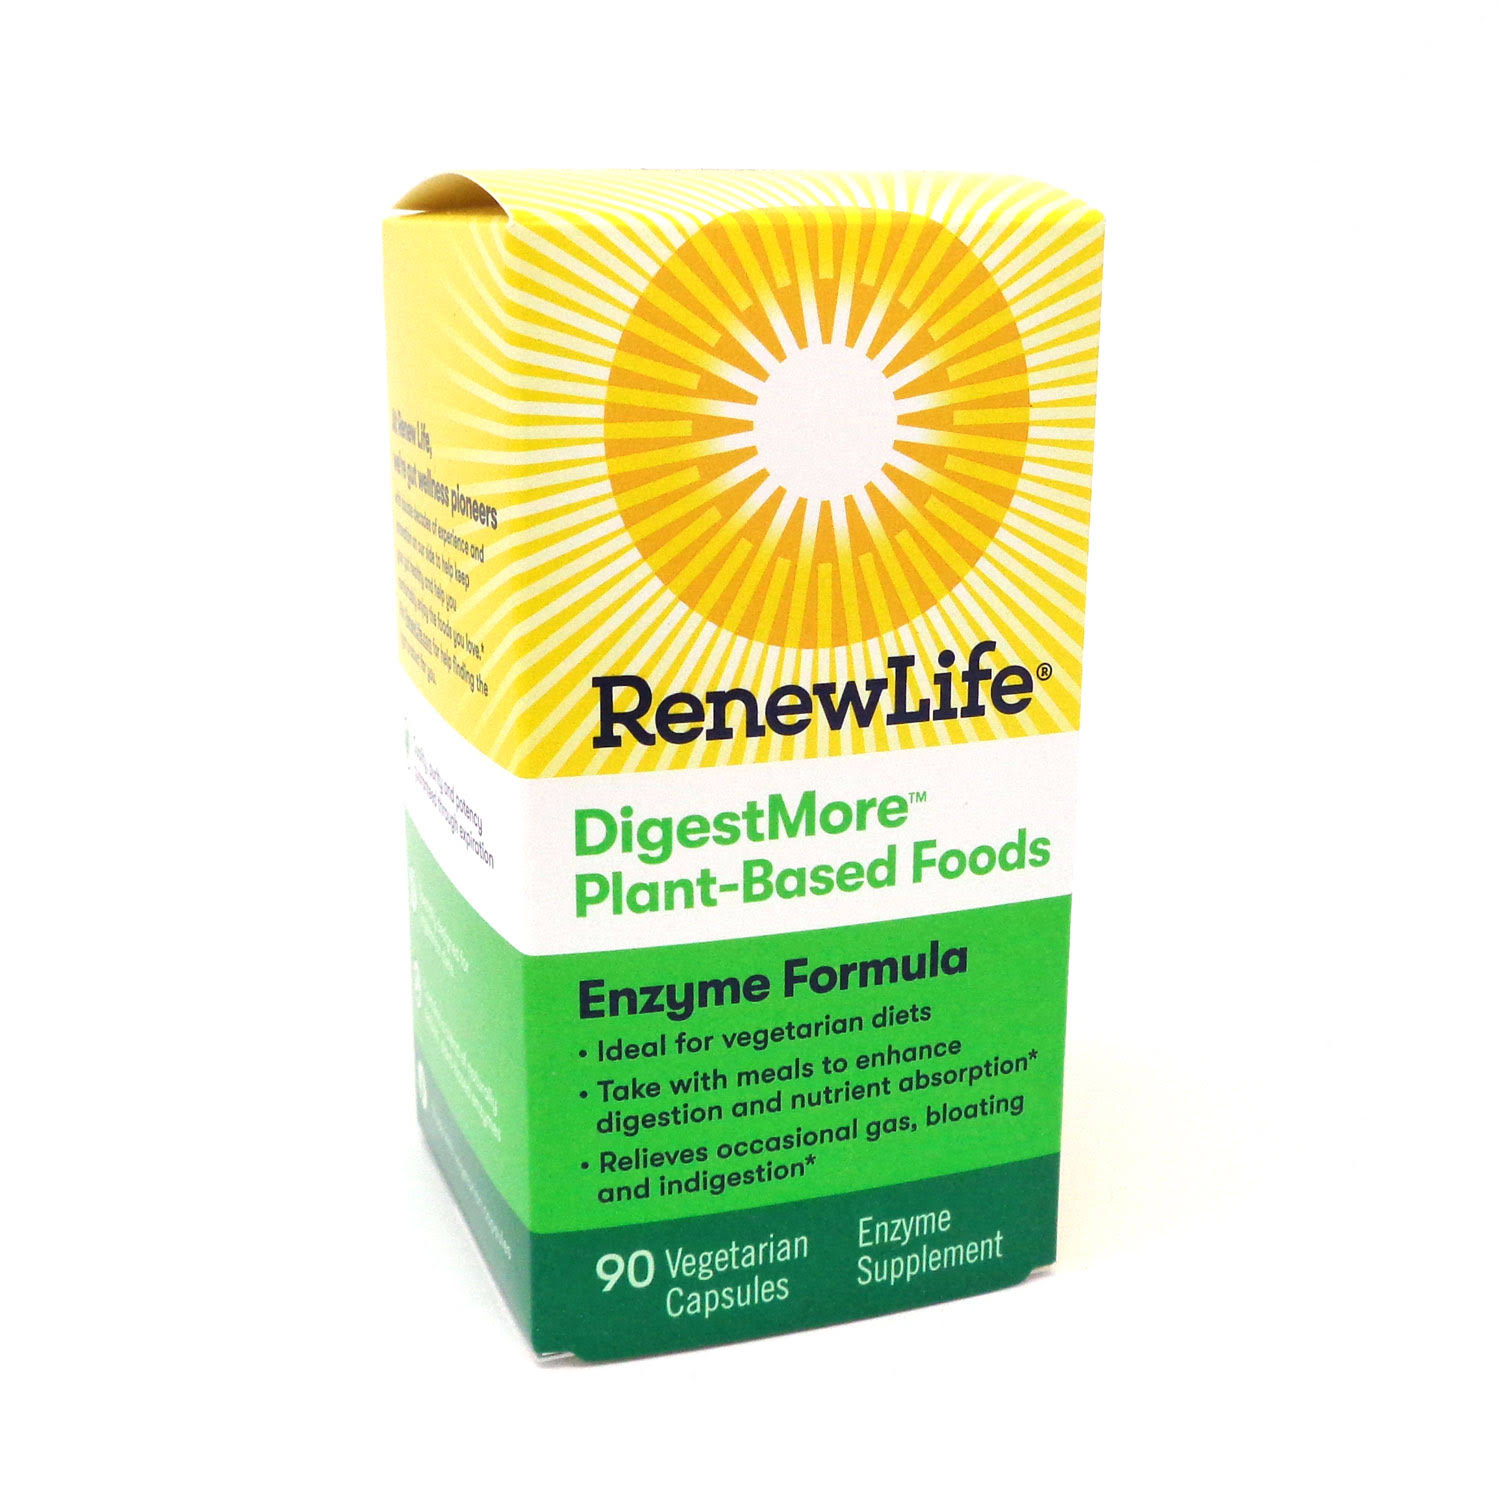 ReNew Life - DigestMore Plant-Based Foods, Enzyme Formula - 90